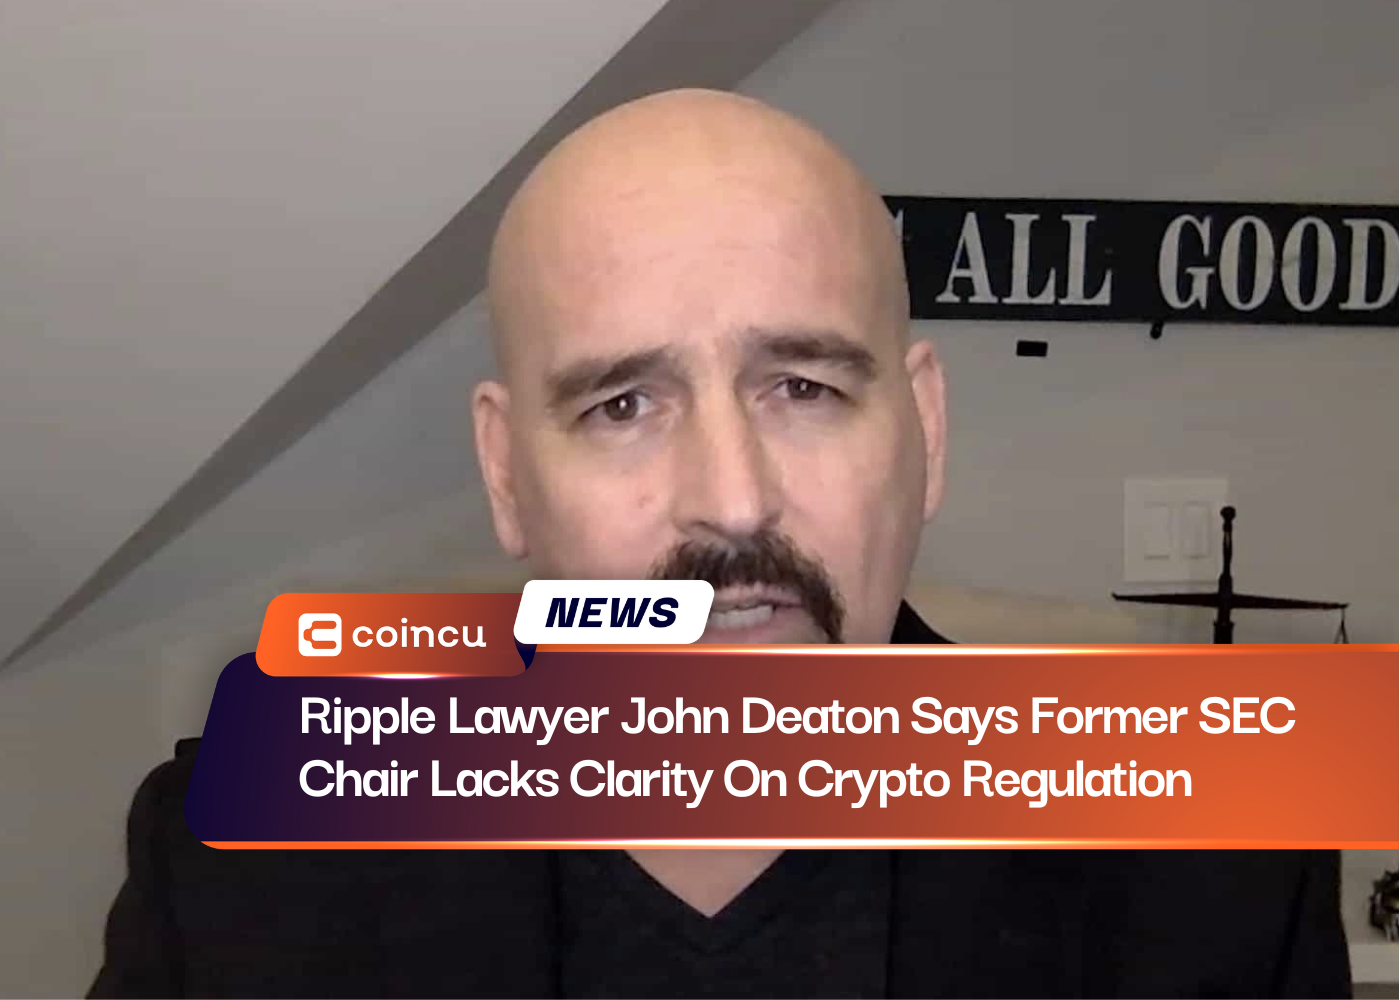 Ripple Lawyer John Deaton Says Former SEC Chair Lacks Clarity On Crypto Regulation